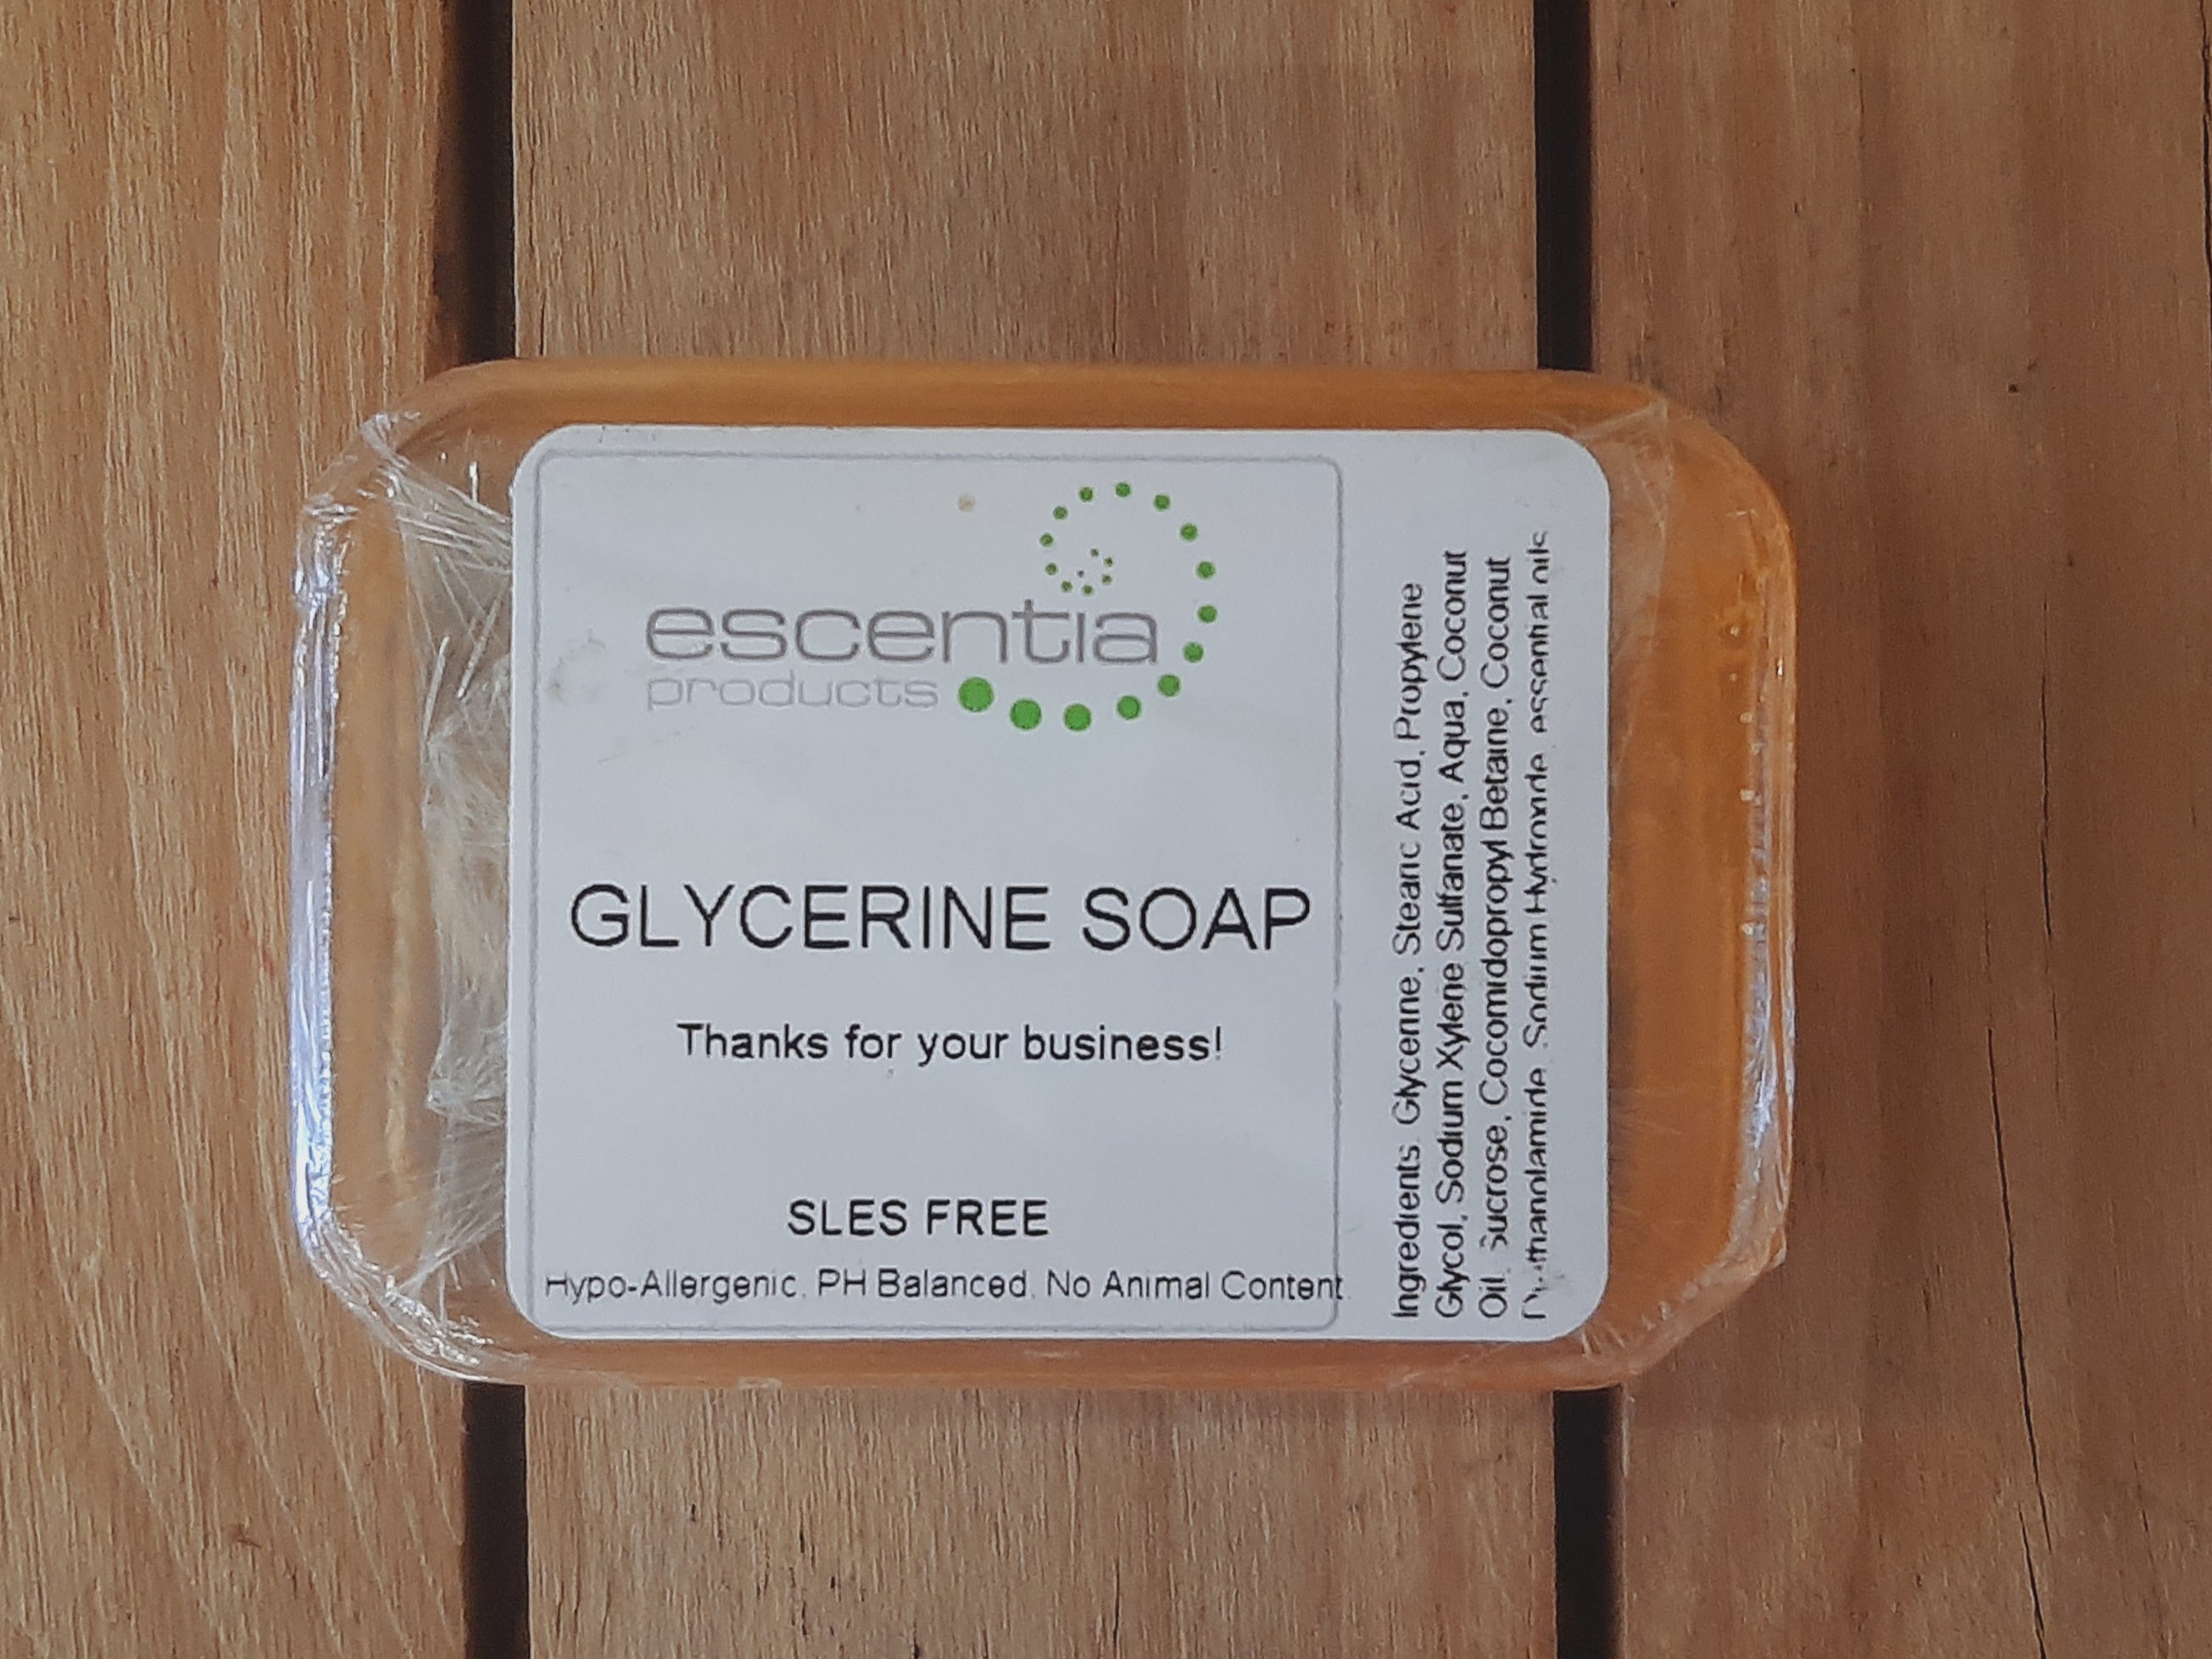 Escentia Neutral Glycerine Soap